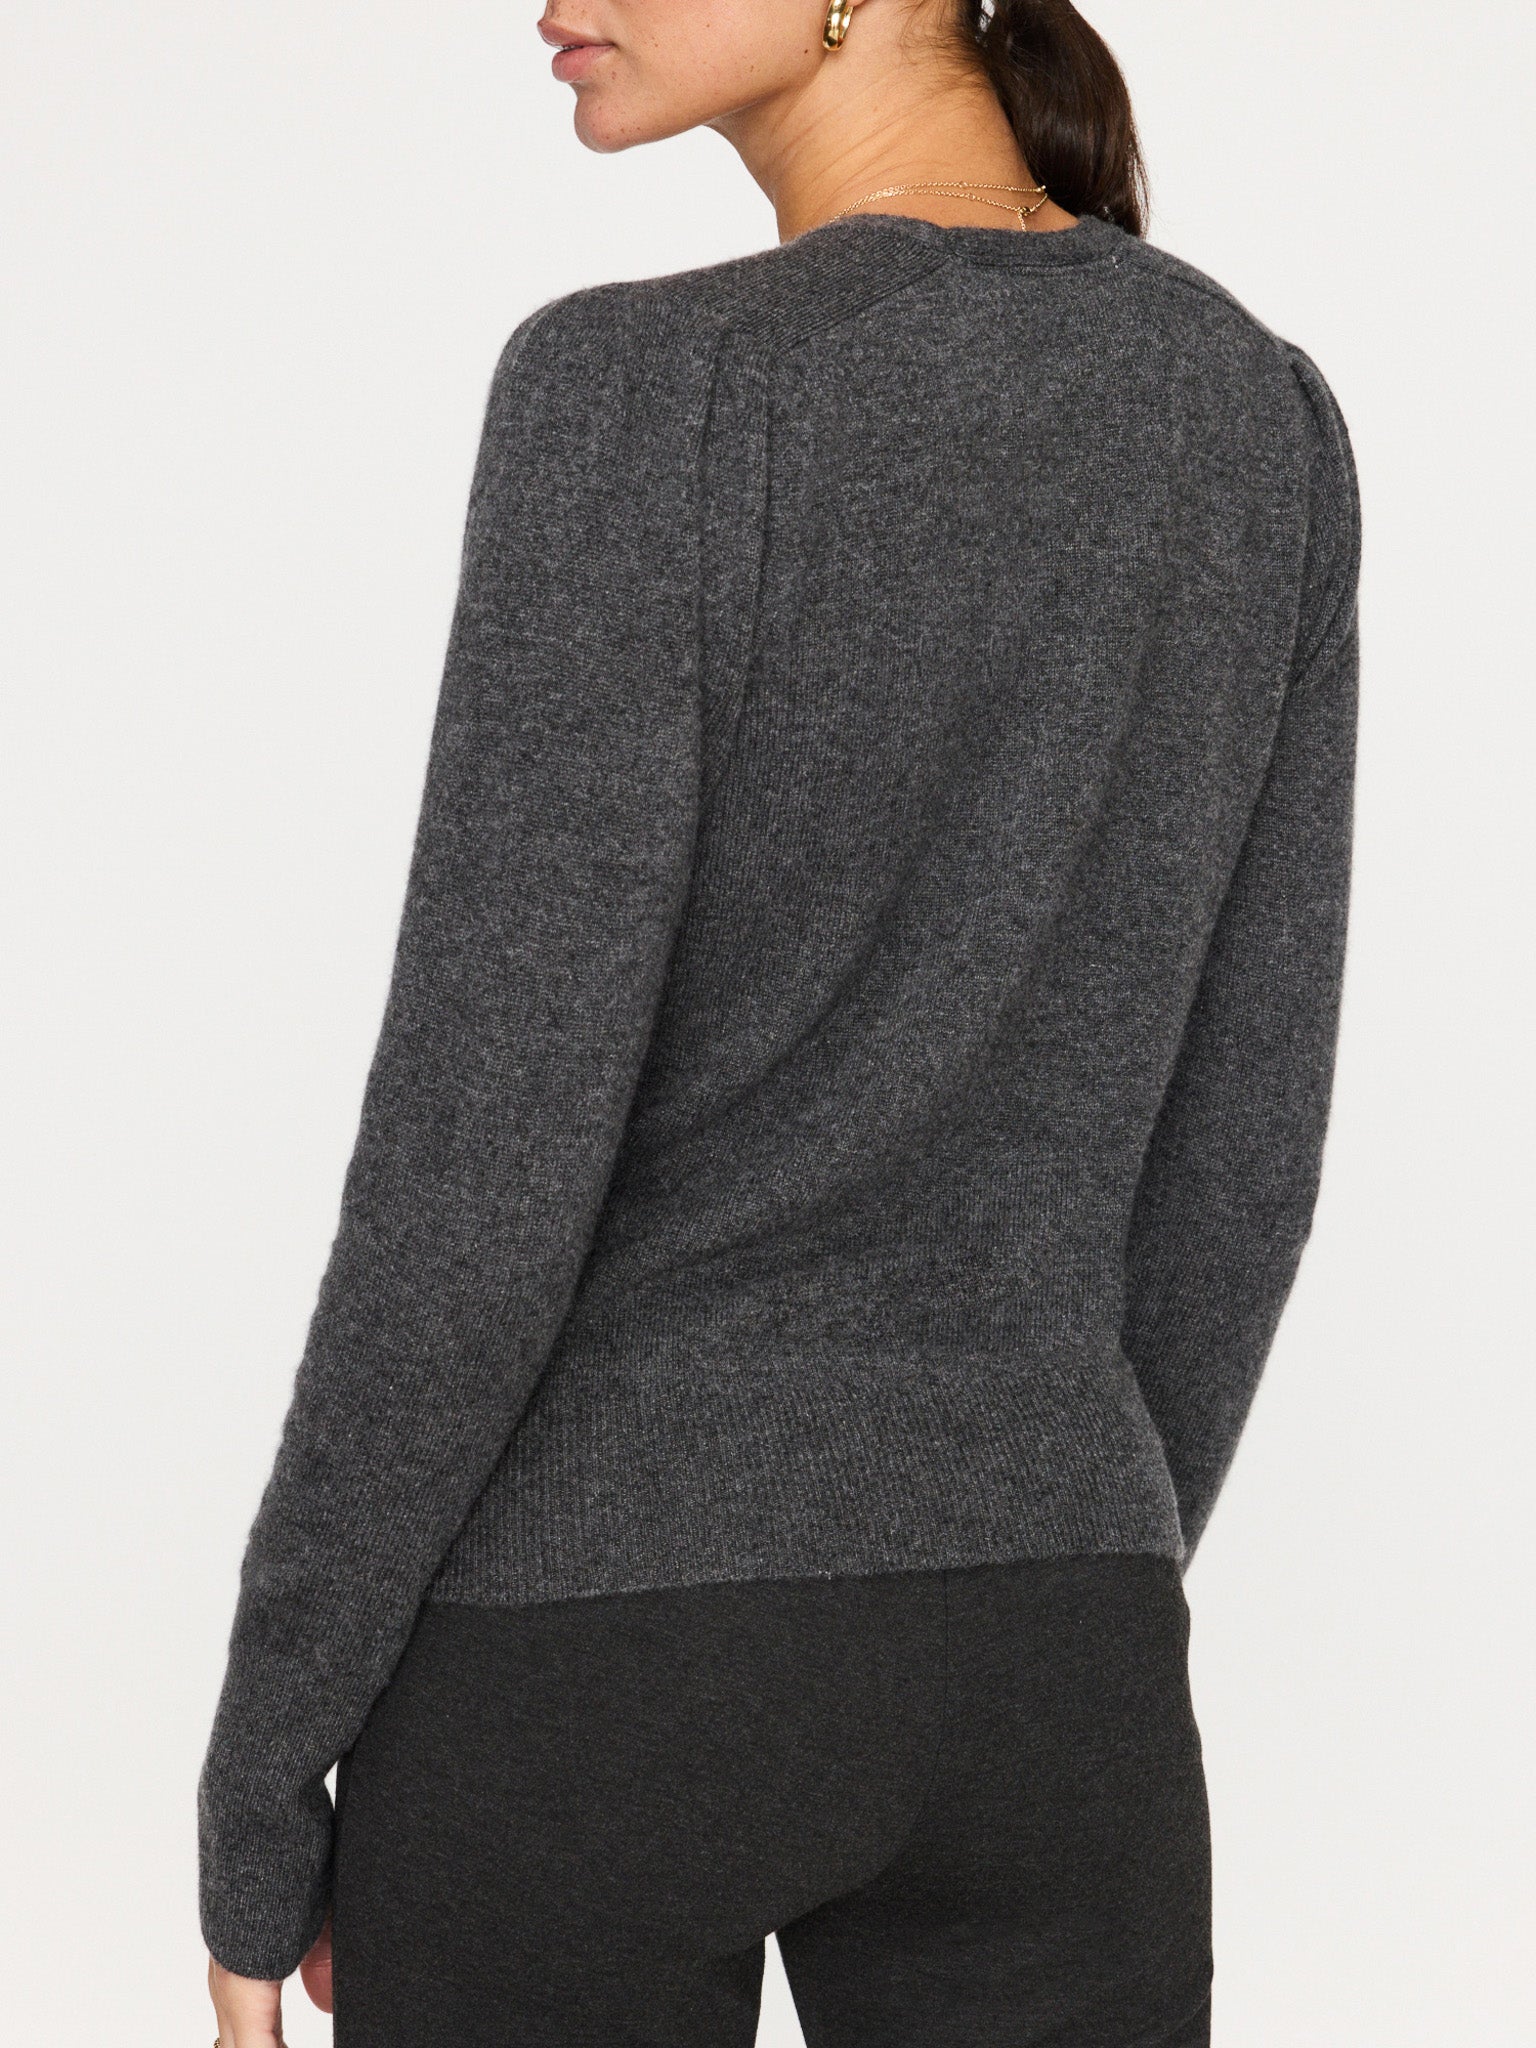 Finn cashmere v-neck gray wrap sweater back view